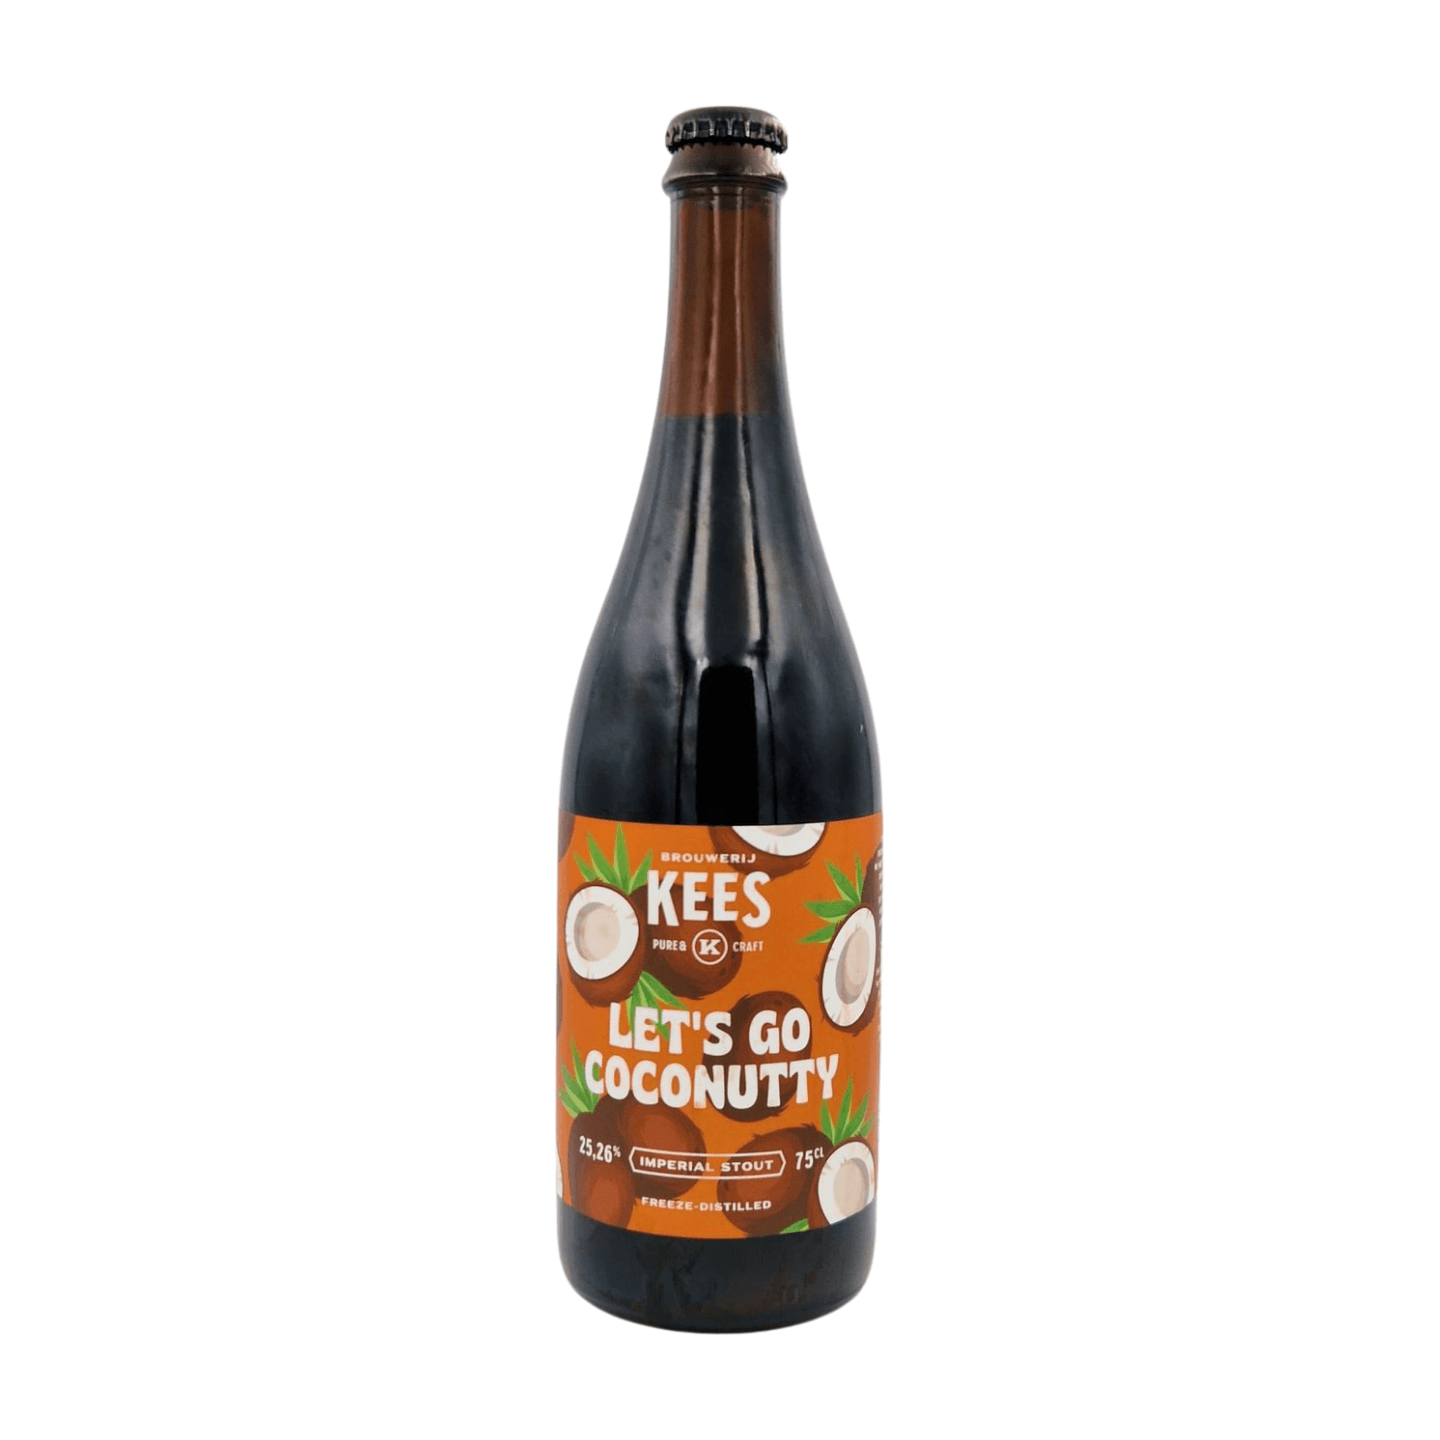 Kees Lets Go Coconutty | Freeze Distilled Stout Webshop Online Verdins Bierwinkel Rotterdam